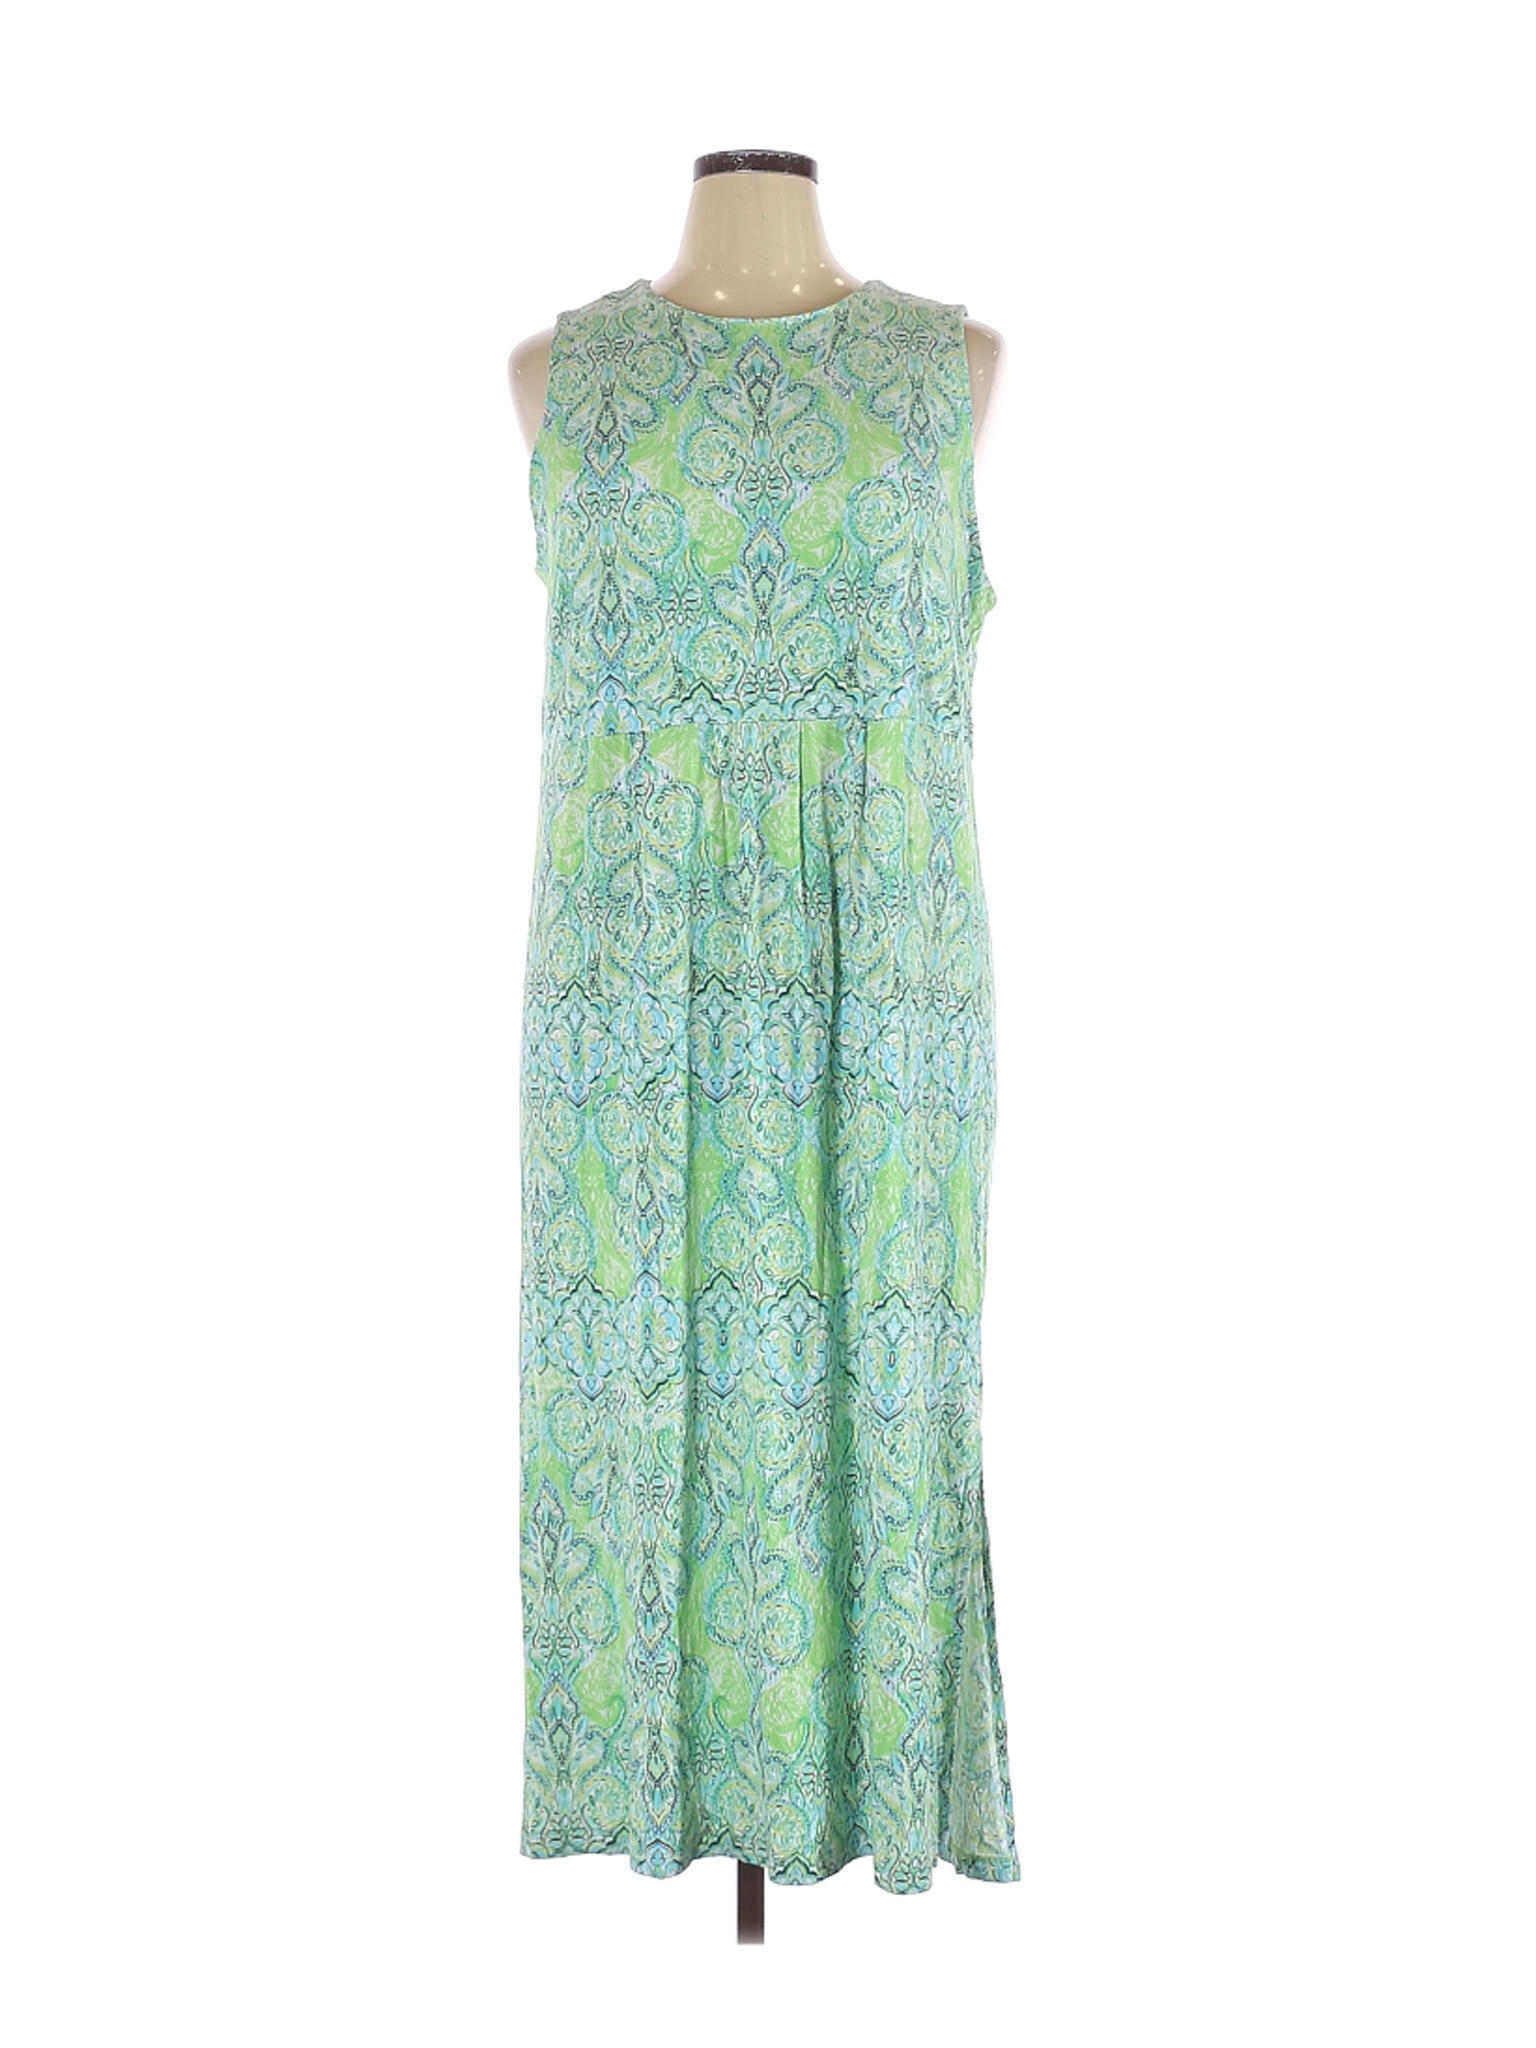 J.Jill Women Green Casual Dress XL | eBay